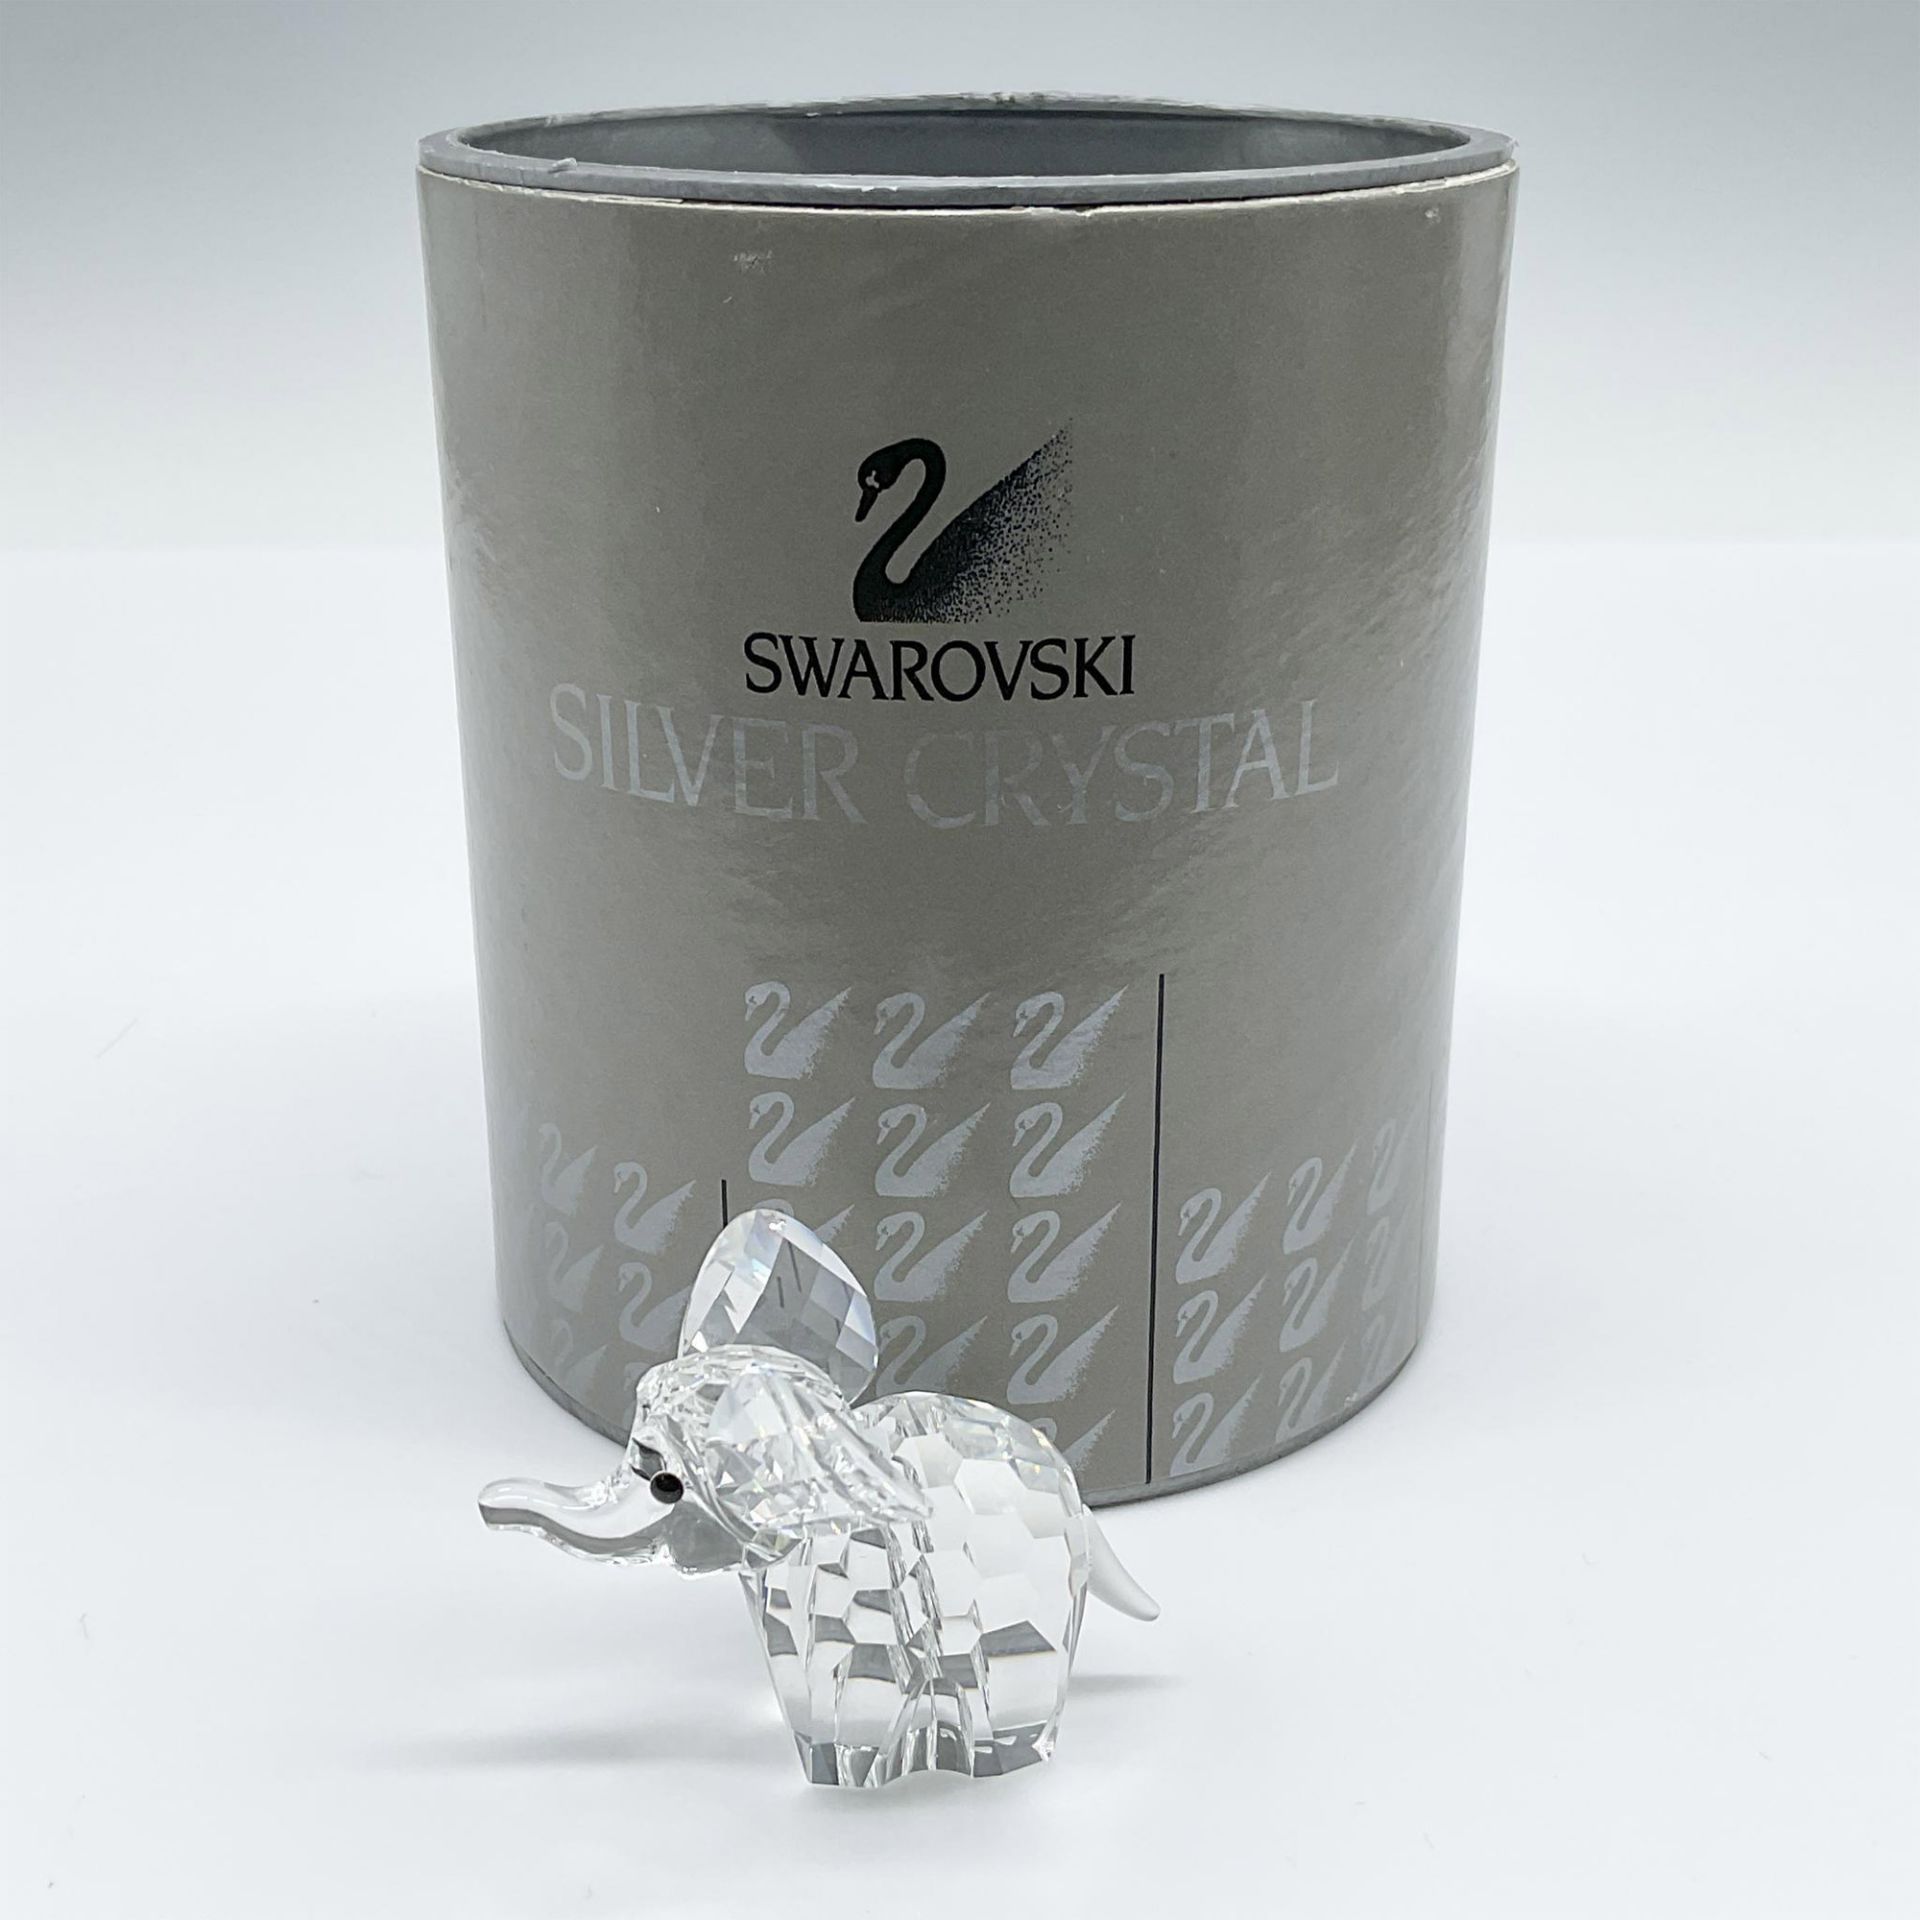 Swarovski Silver Crystal Figurine, Elephant Small - Image 4 of 4